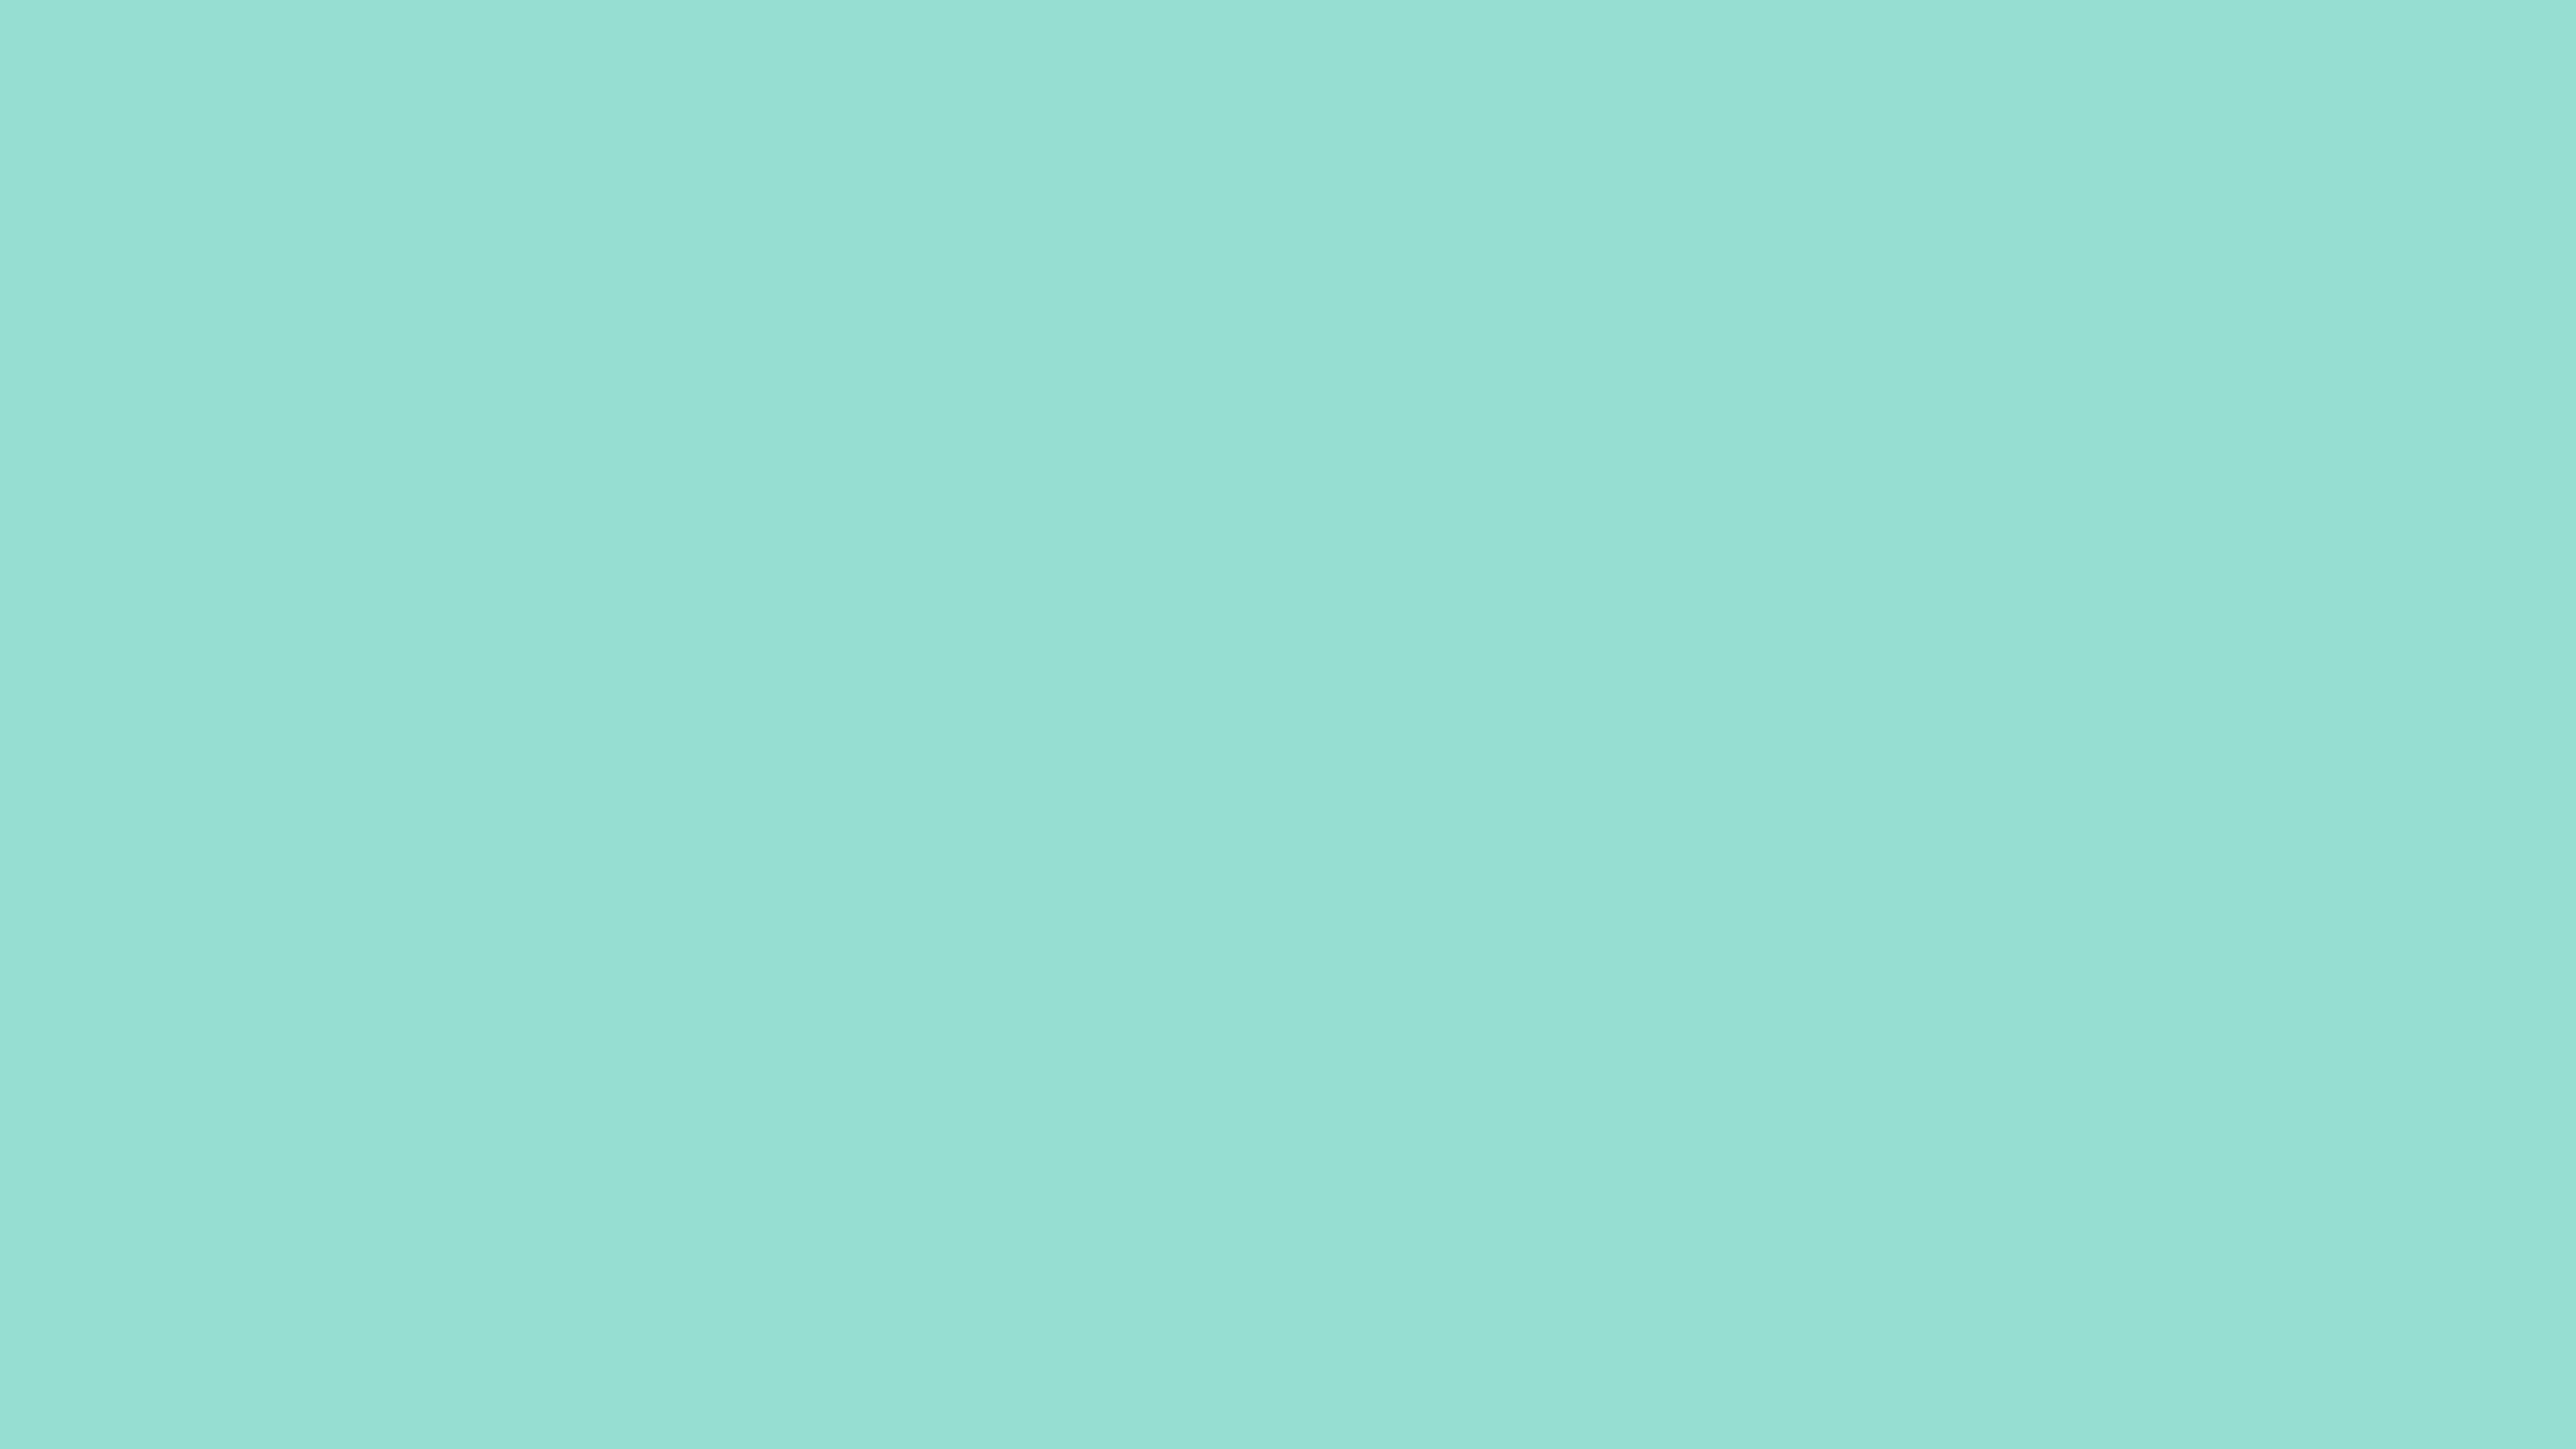 5120x2880 Pale Robin Egg Blue Solid Color Background